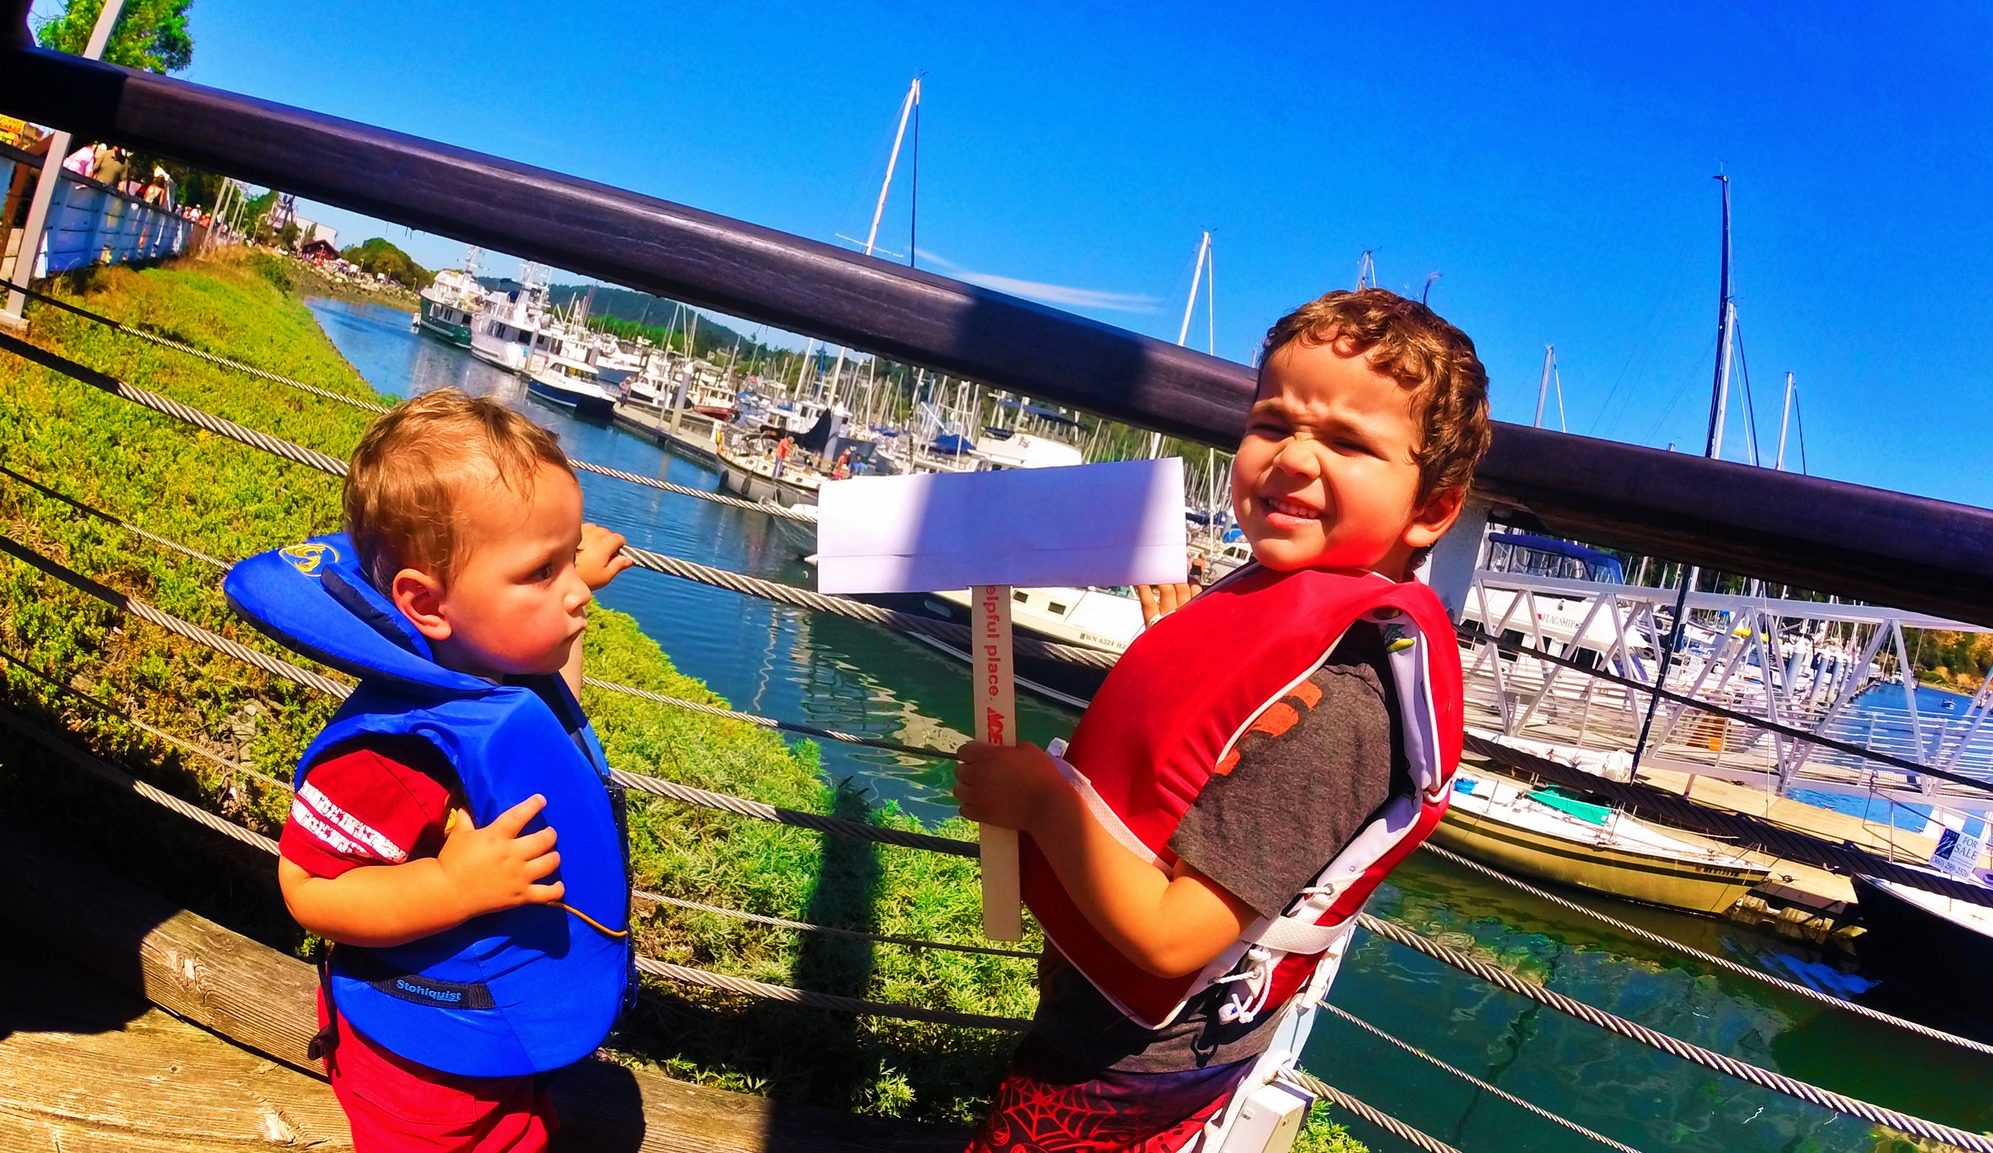 Taylor-Kids-and-Boats-in-Cap-Sante-Marina-Anacortes-e1467095620364.jpg